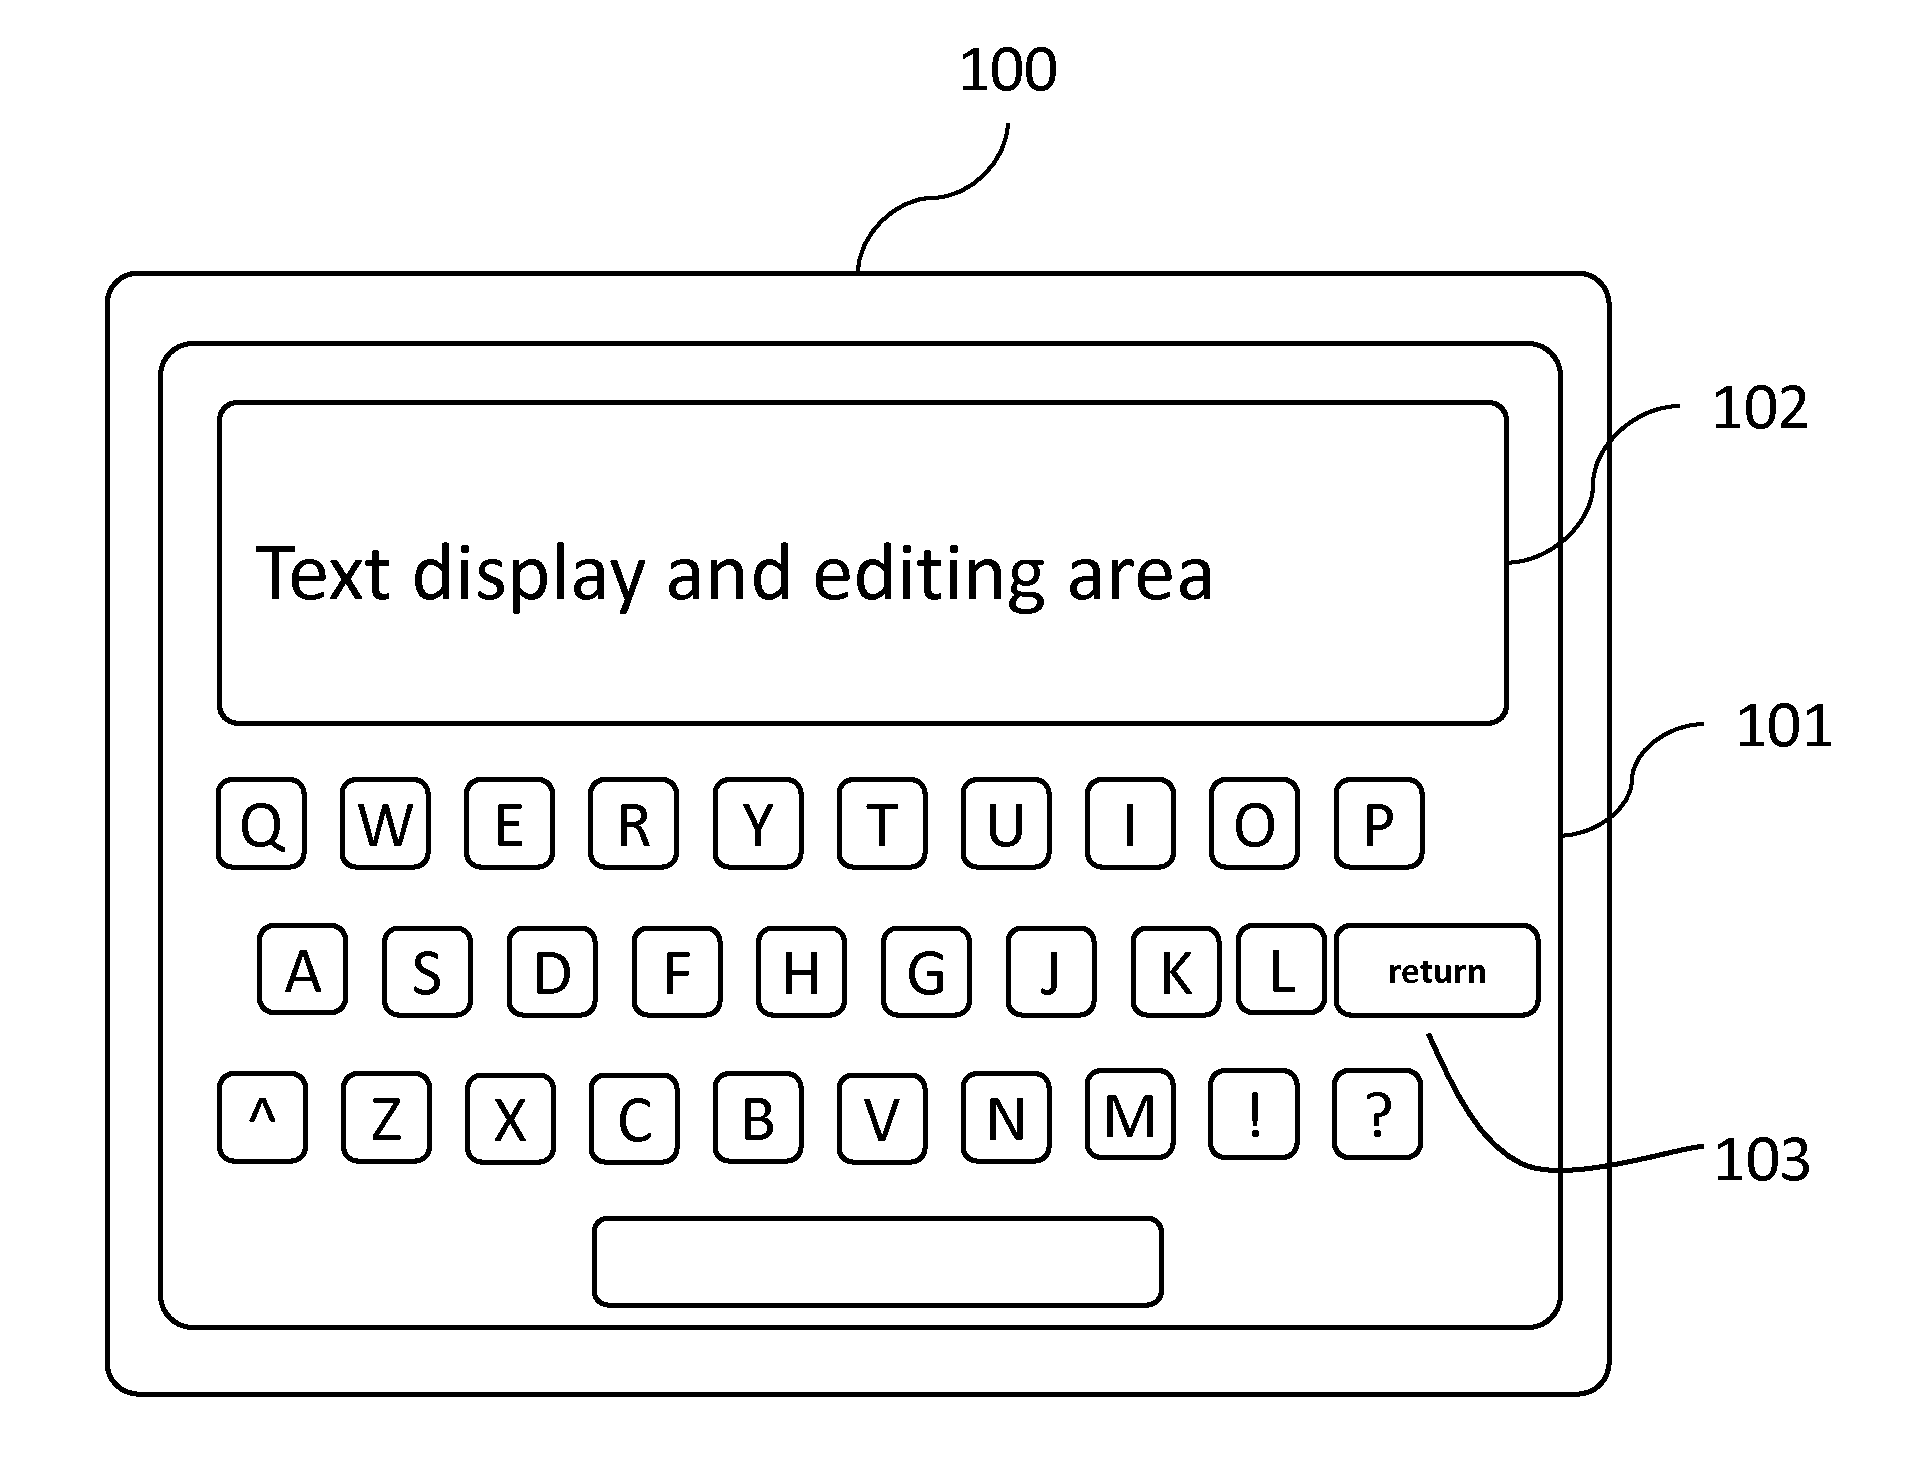 Ergonomic micro user interface display and editing